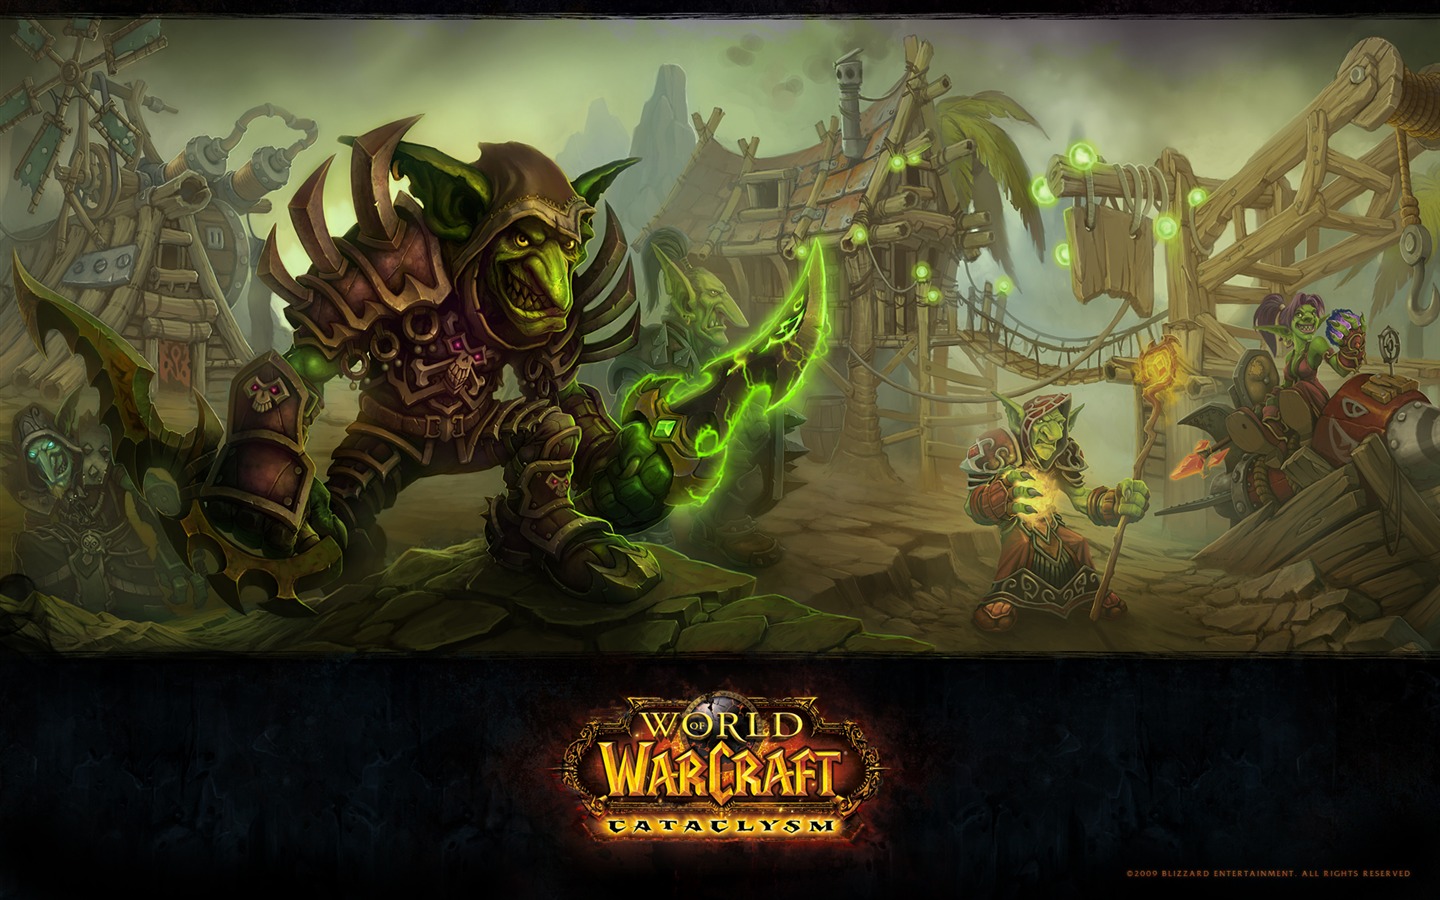 World of Warcraft 魔兽世界高清壁纸(二)9 - 1440x900